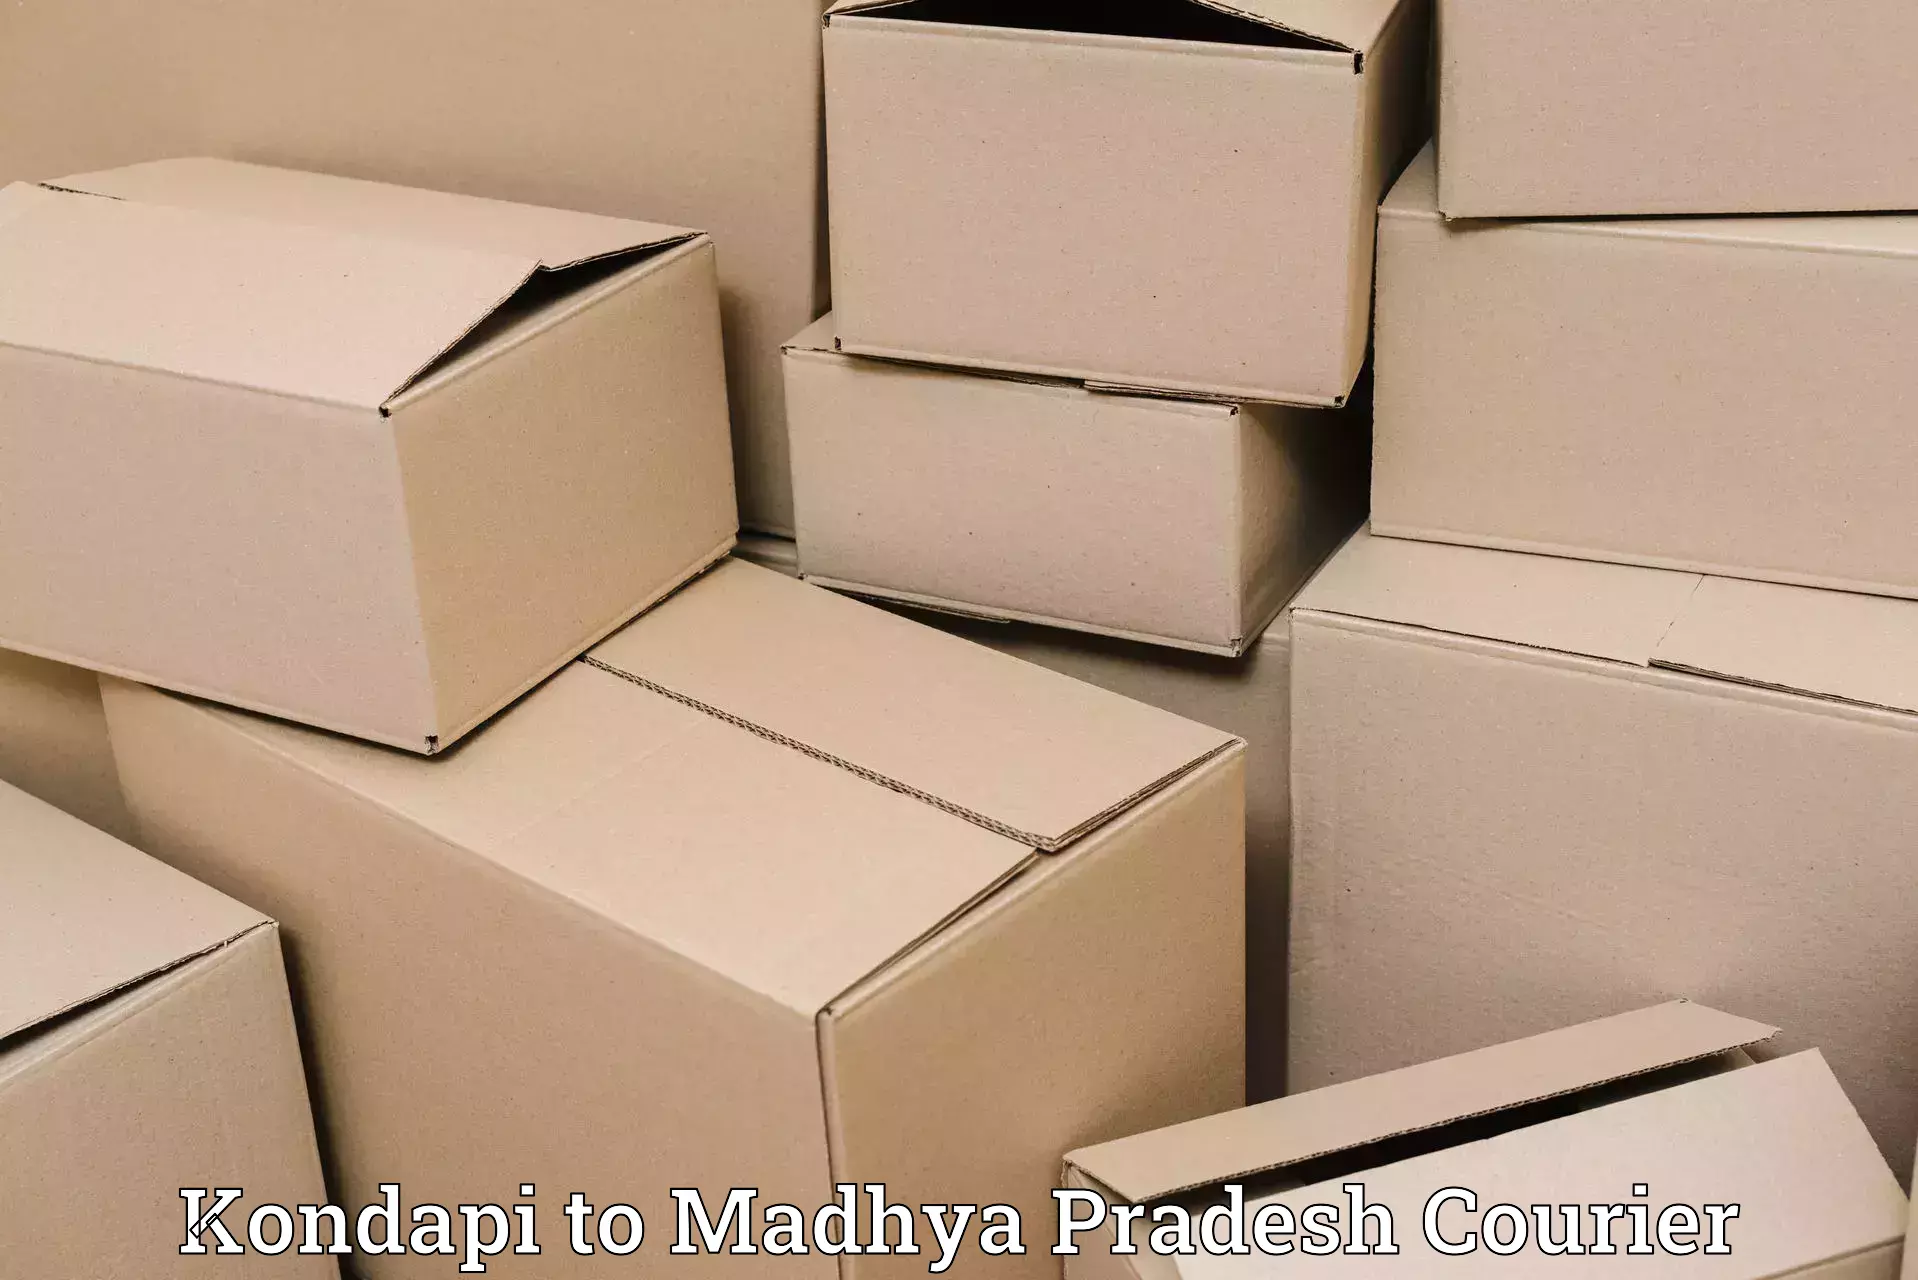 Holiday shipping services Kondapi to Gwalior